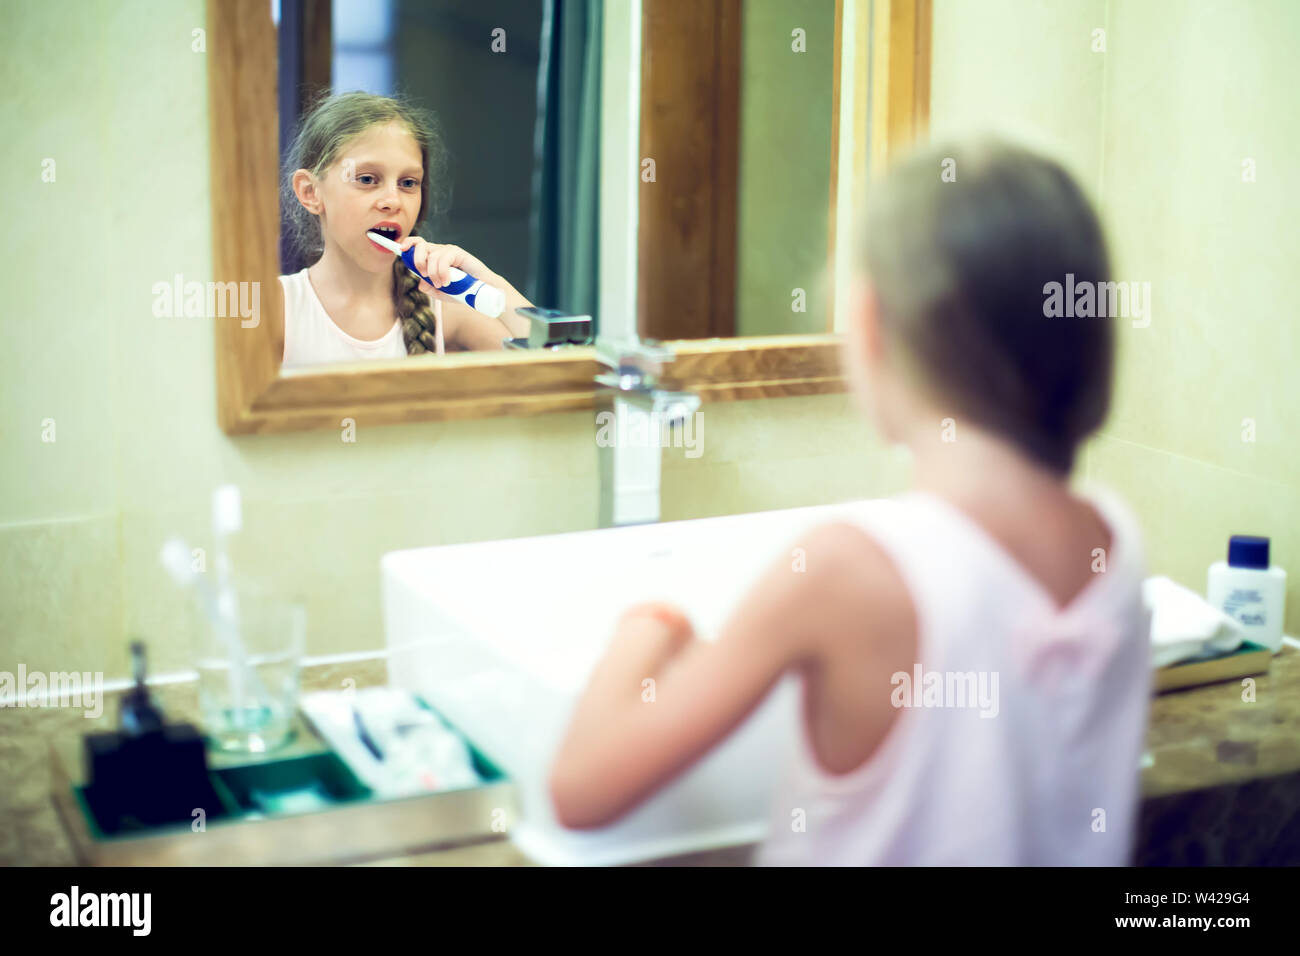 Smiling cute little girl brushing teeth in bathroom. Hygiene concept Stock Photo